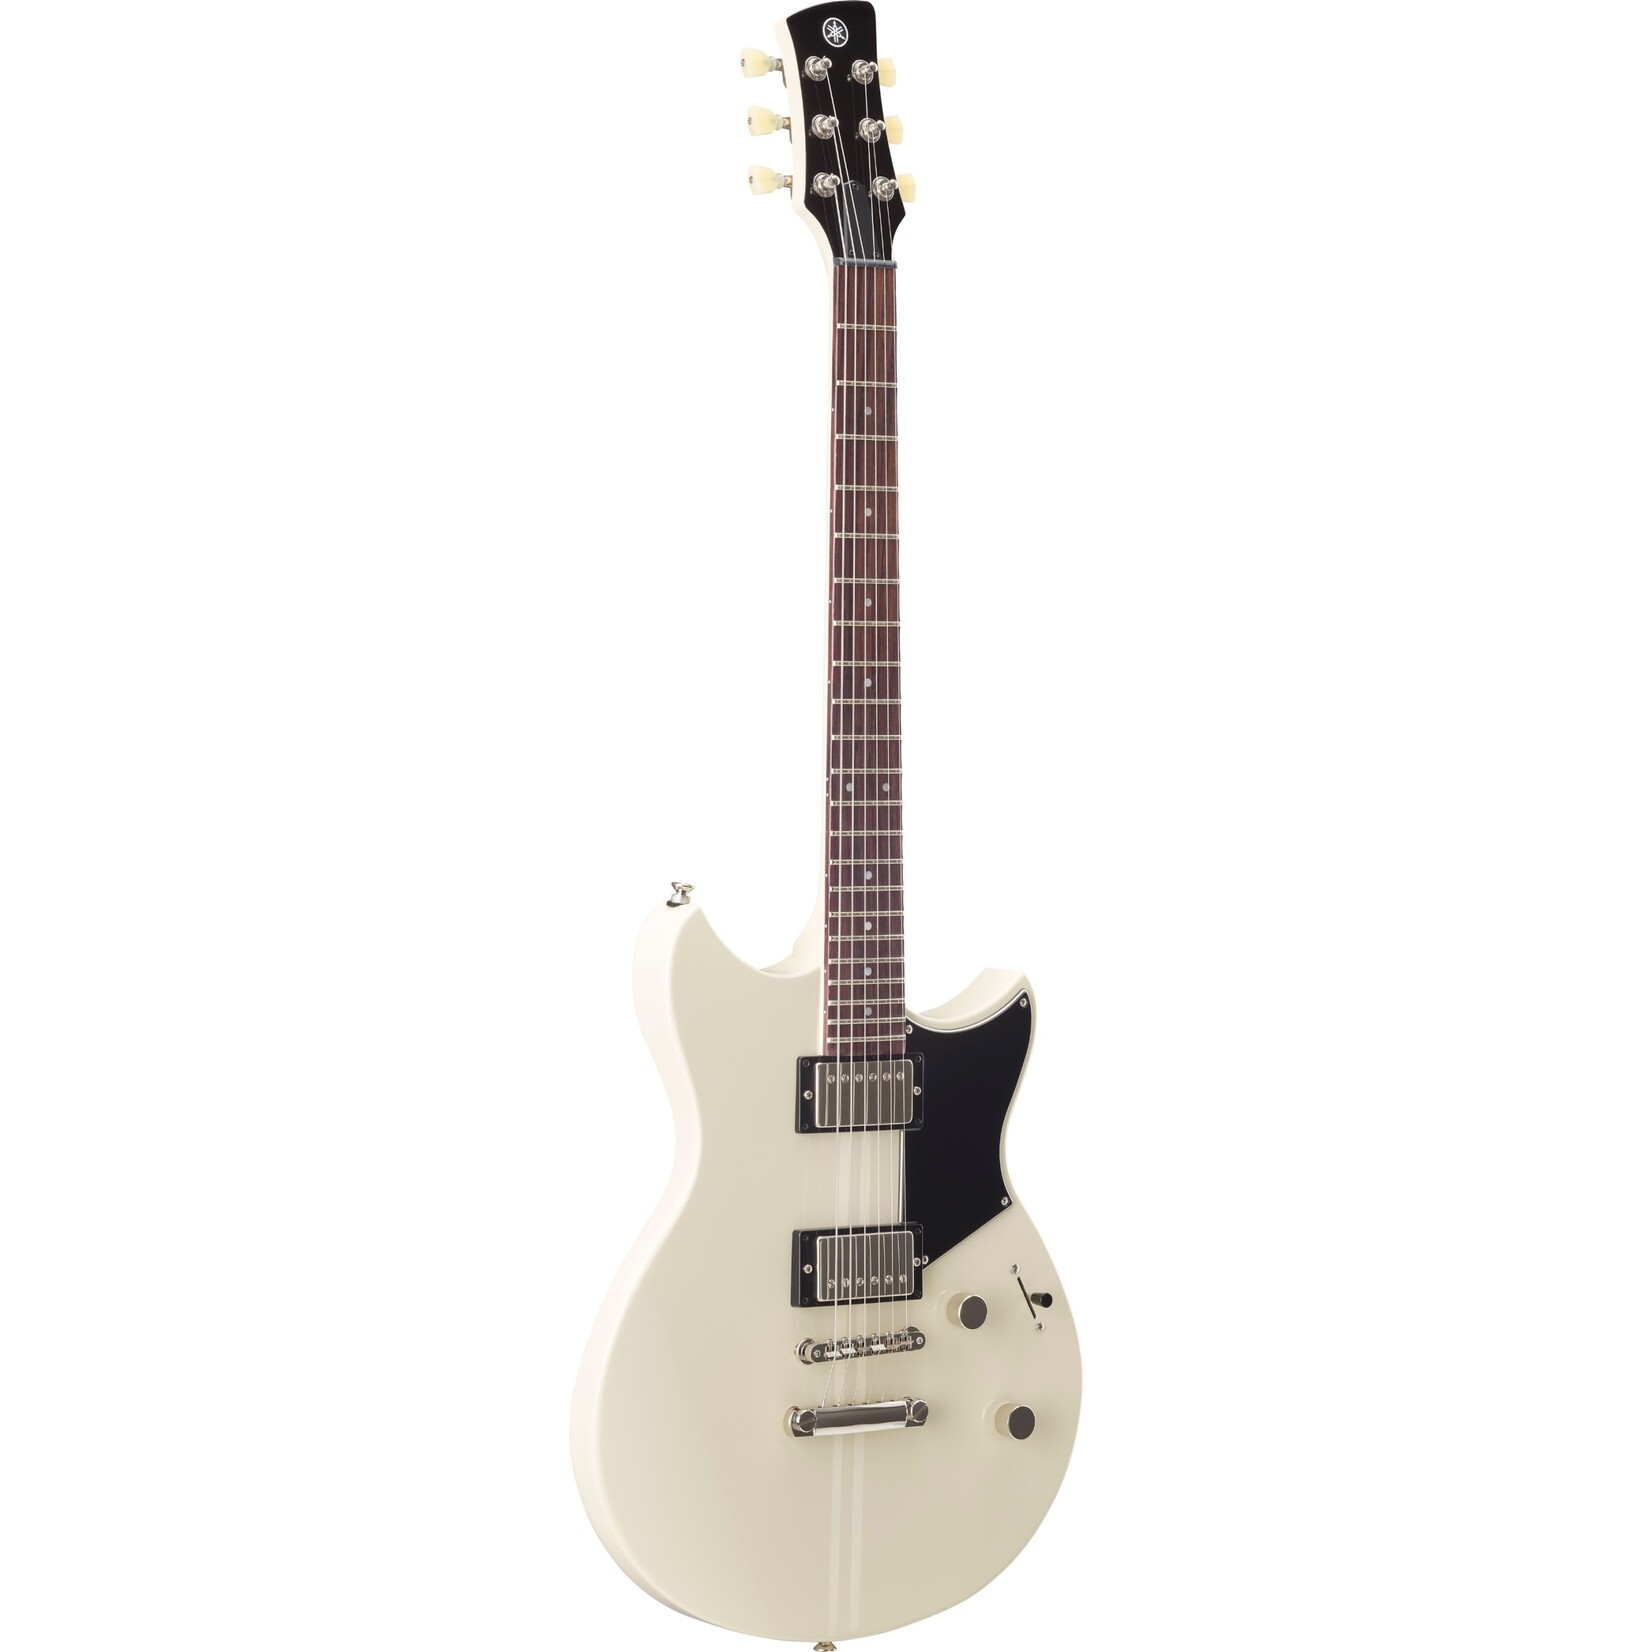 Yamaha Yamaha Revstar Element RSE20 Electric Guitar in Vintage White